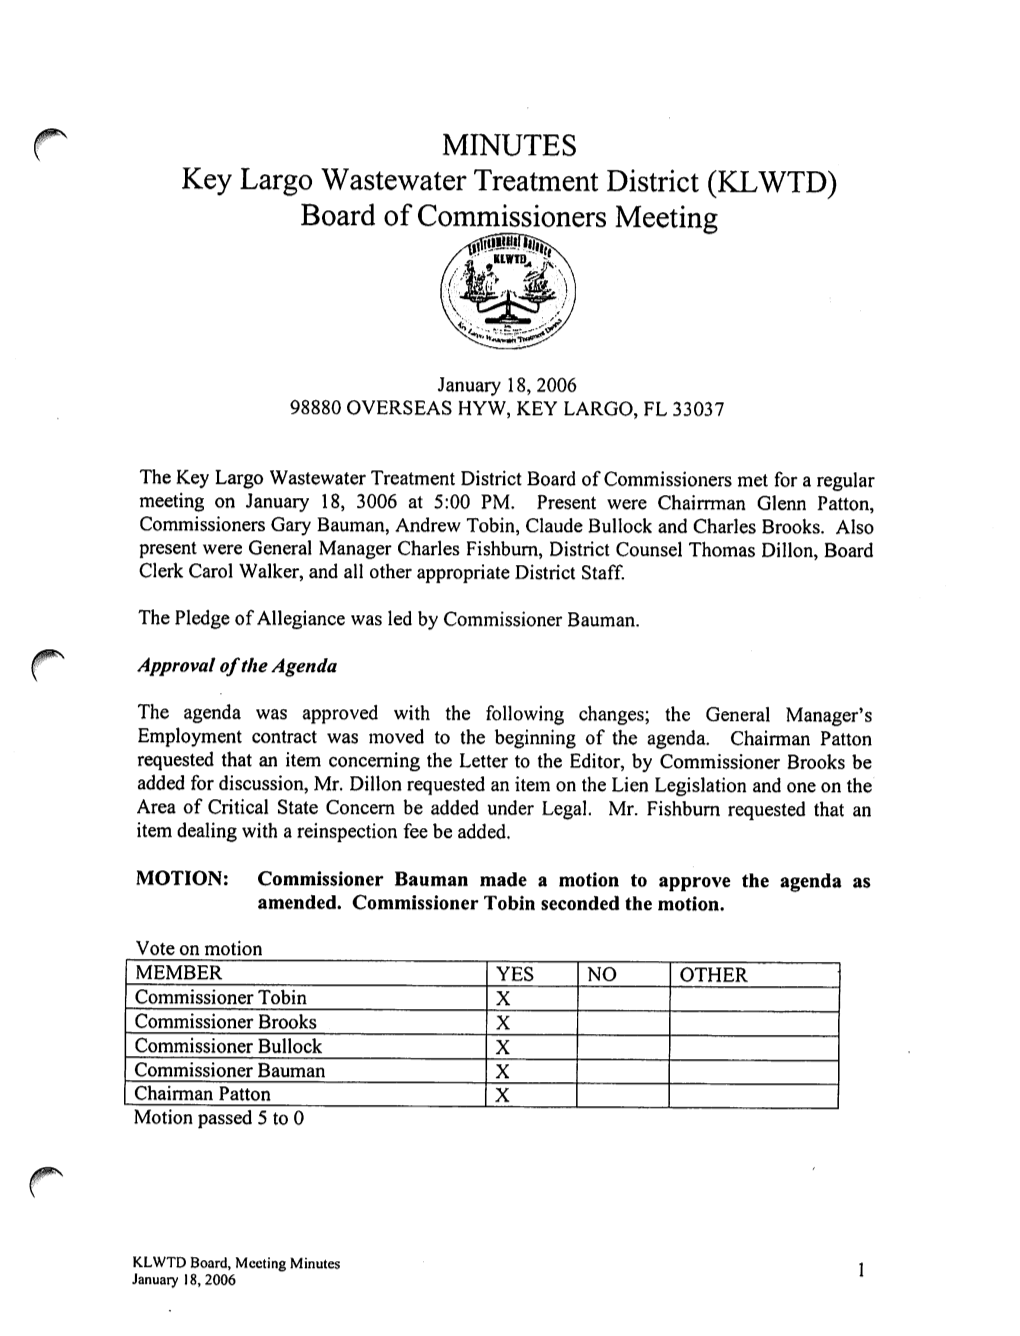 Key Largo Wastewater Treatment District (KLWTD) Board Ofcommissioners Meeting